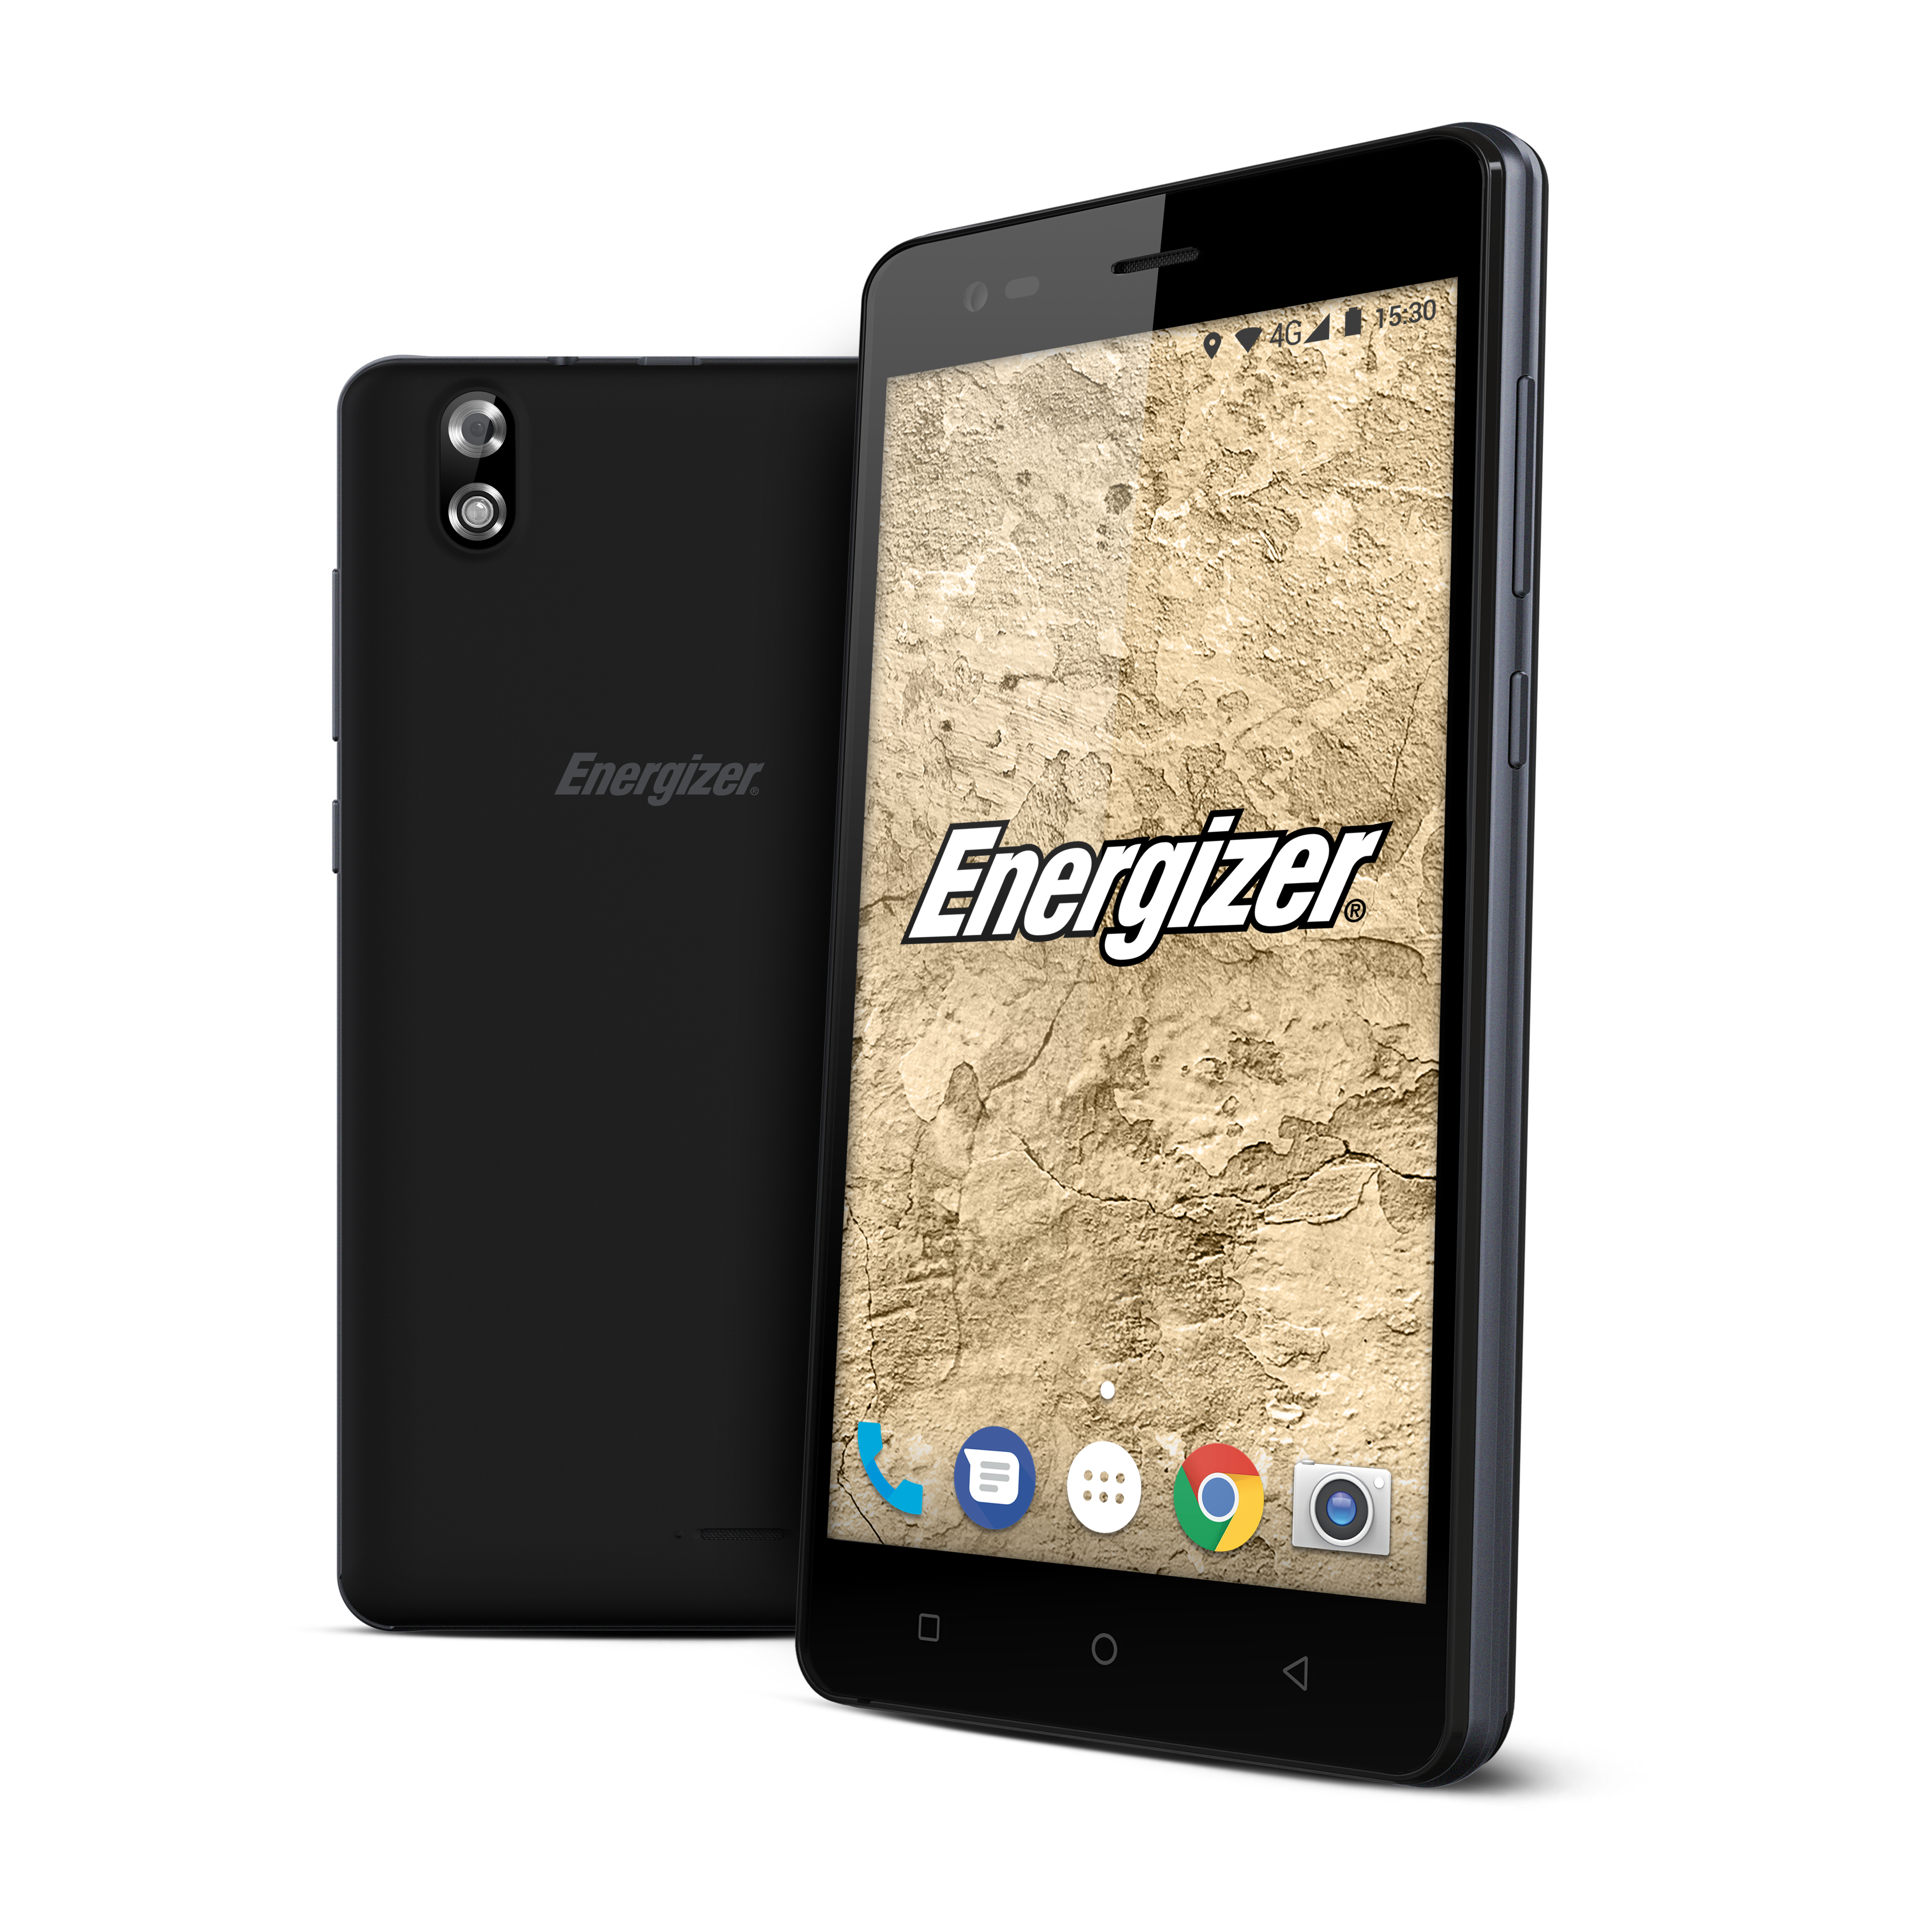 Energizer's new Energy S550 smartphone (Energizer)